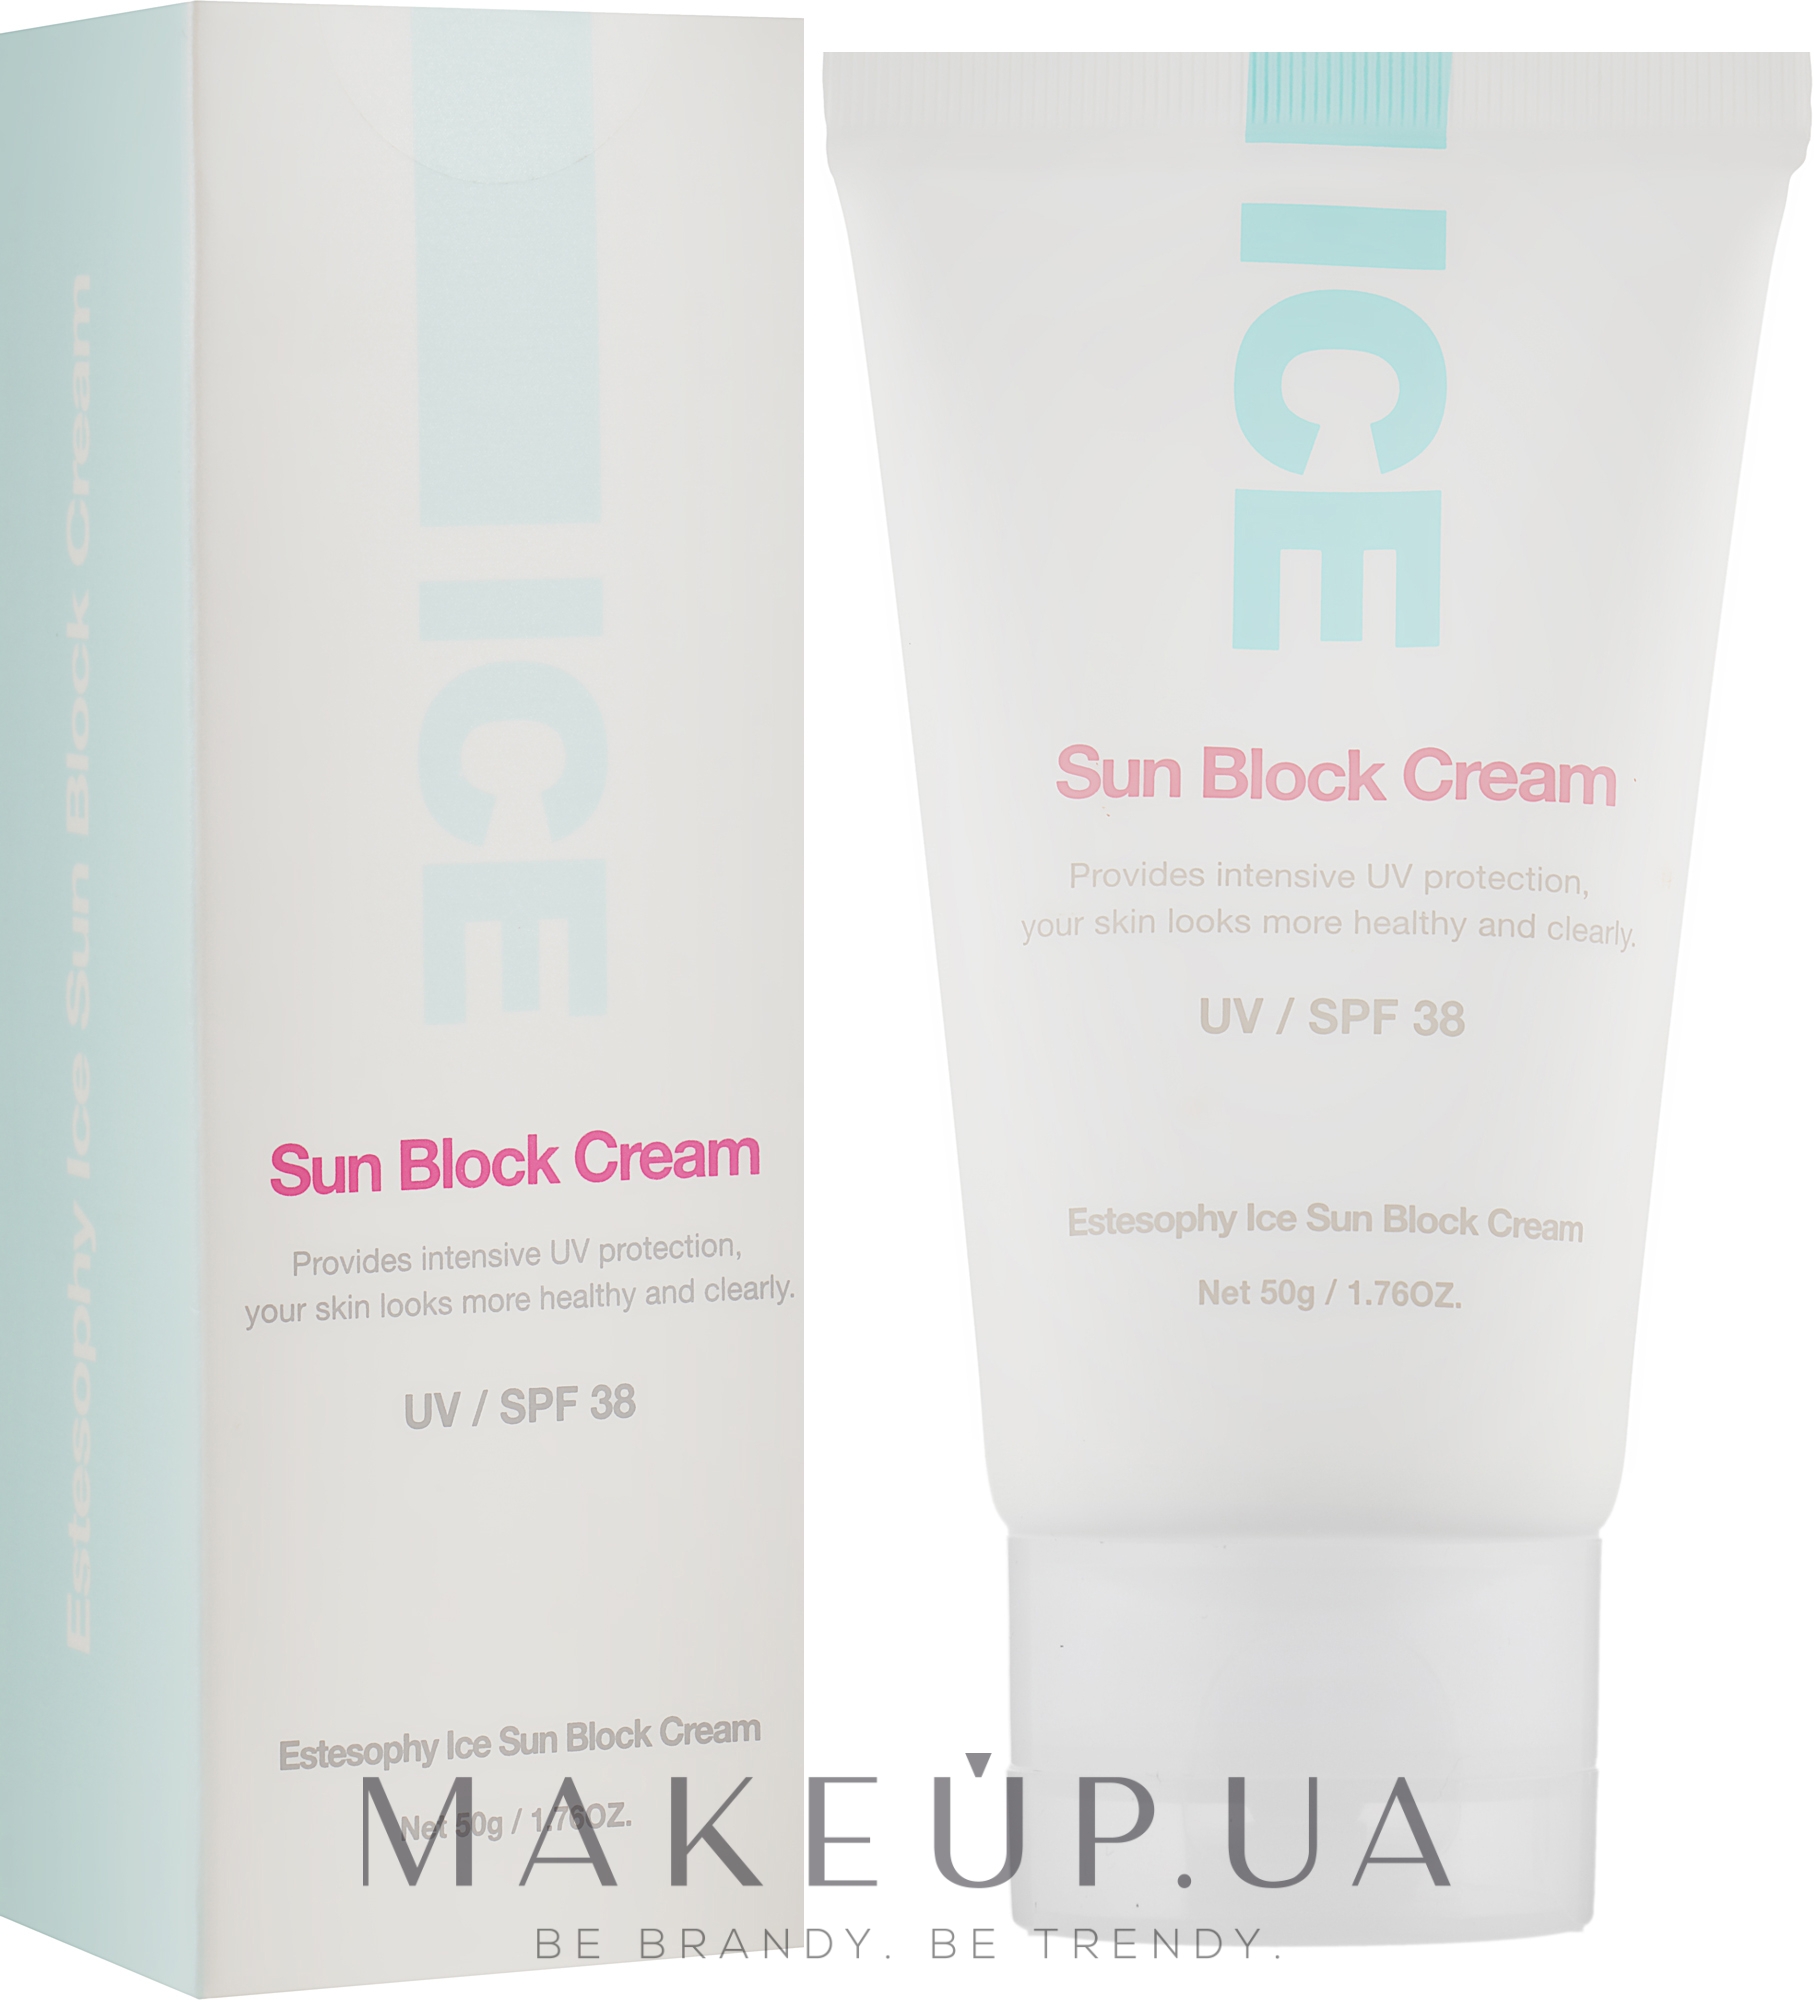 Сонцезахисний крем для обличчя - Estesophy Ice Sun Block Cream UV/SPF 38 — фото 50g